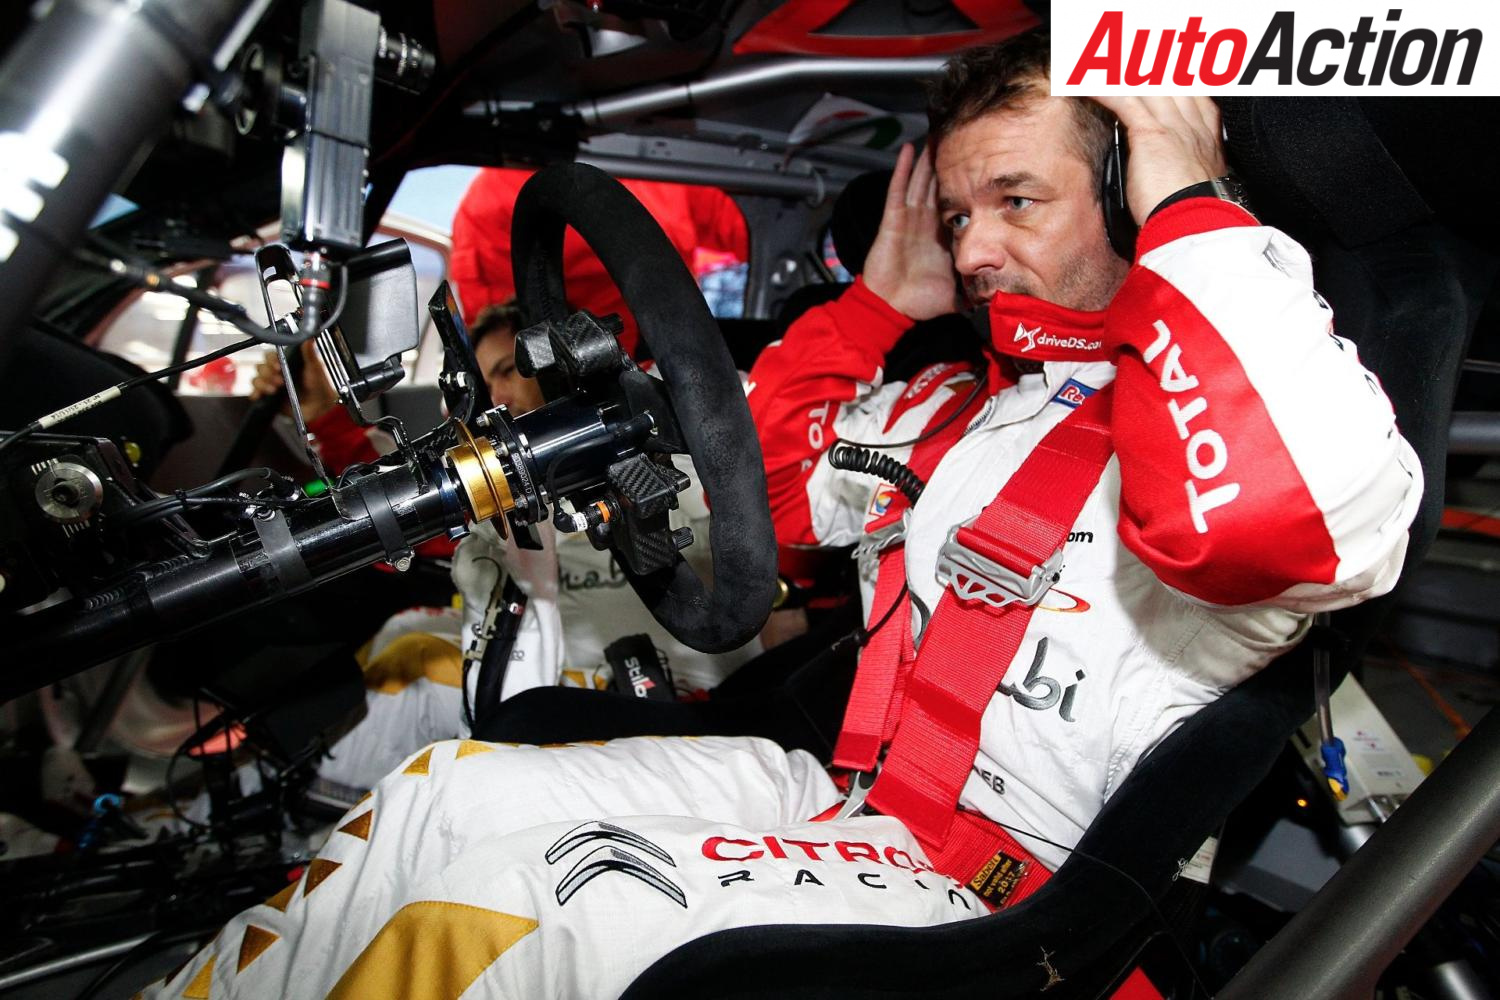 Sebastien Loeb was last behind the wheel of a WRC car in 2015 - Photo: LAT